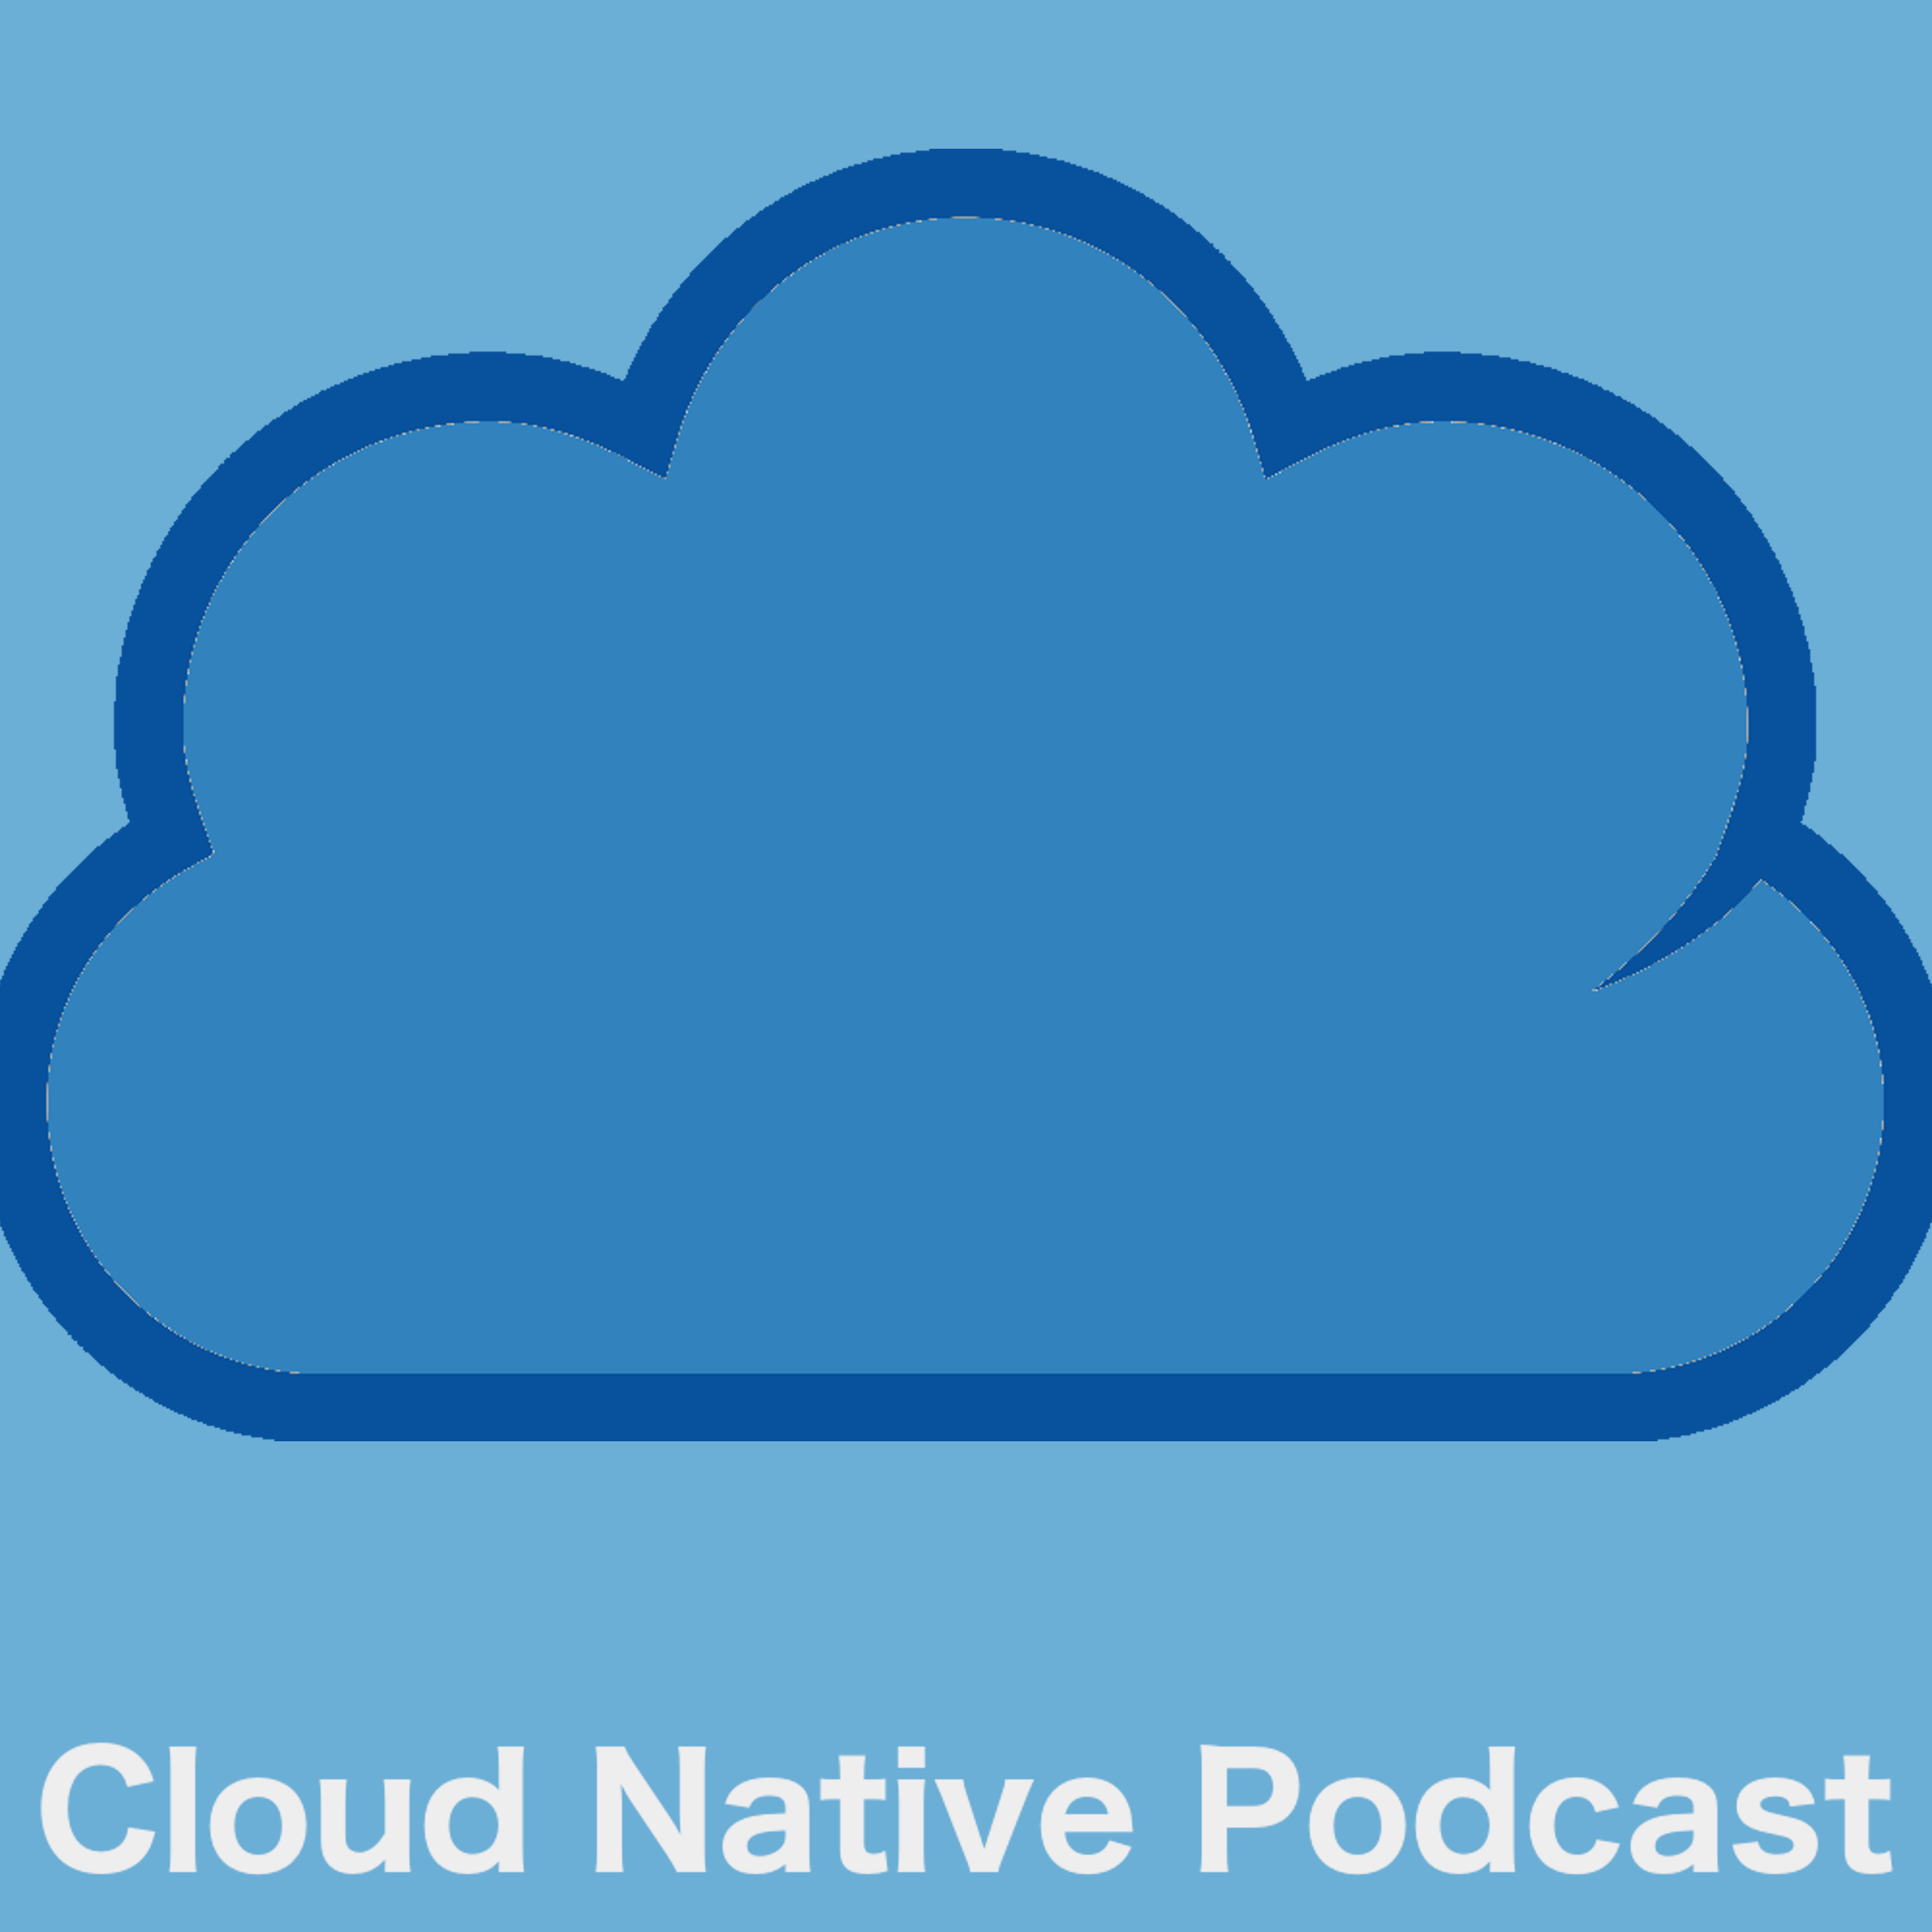 Cloud Native Podcast